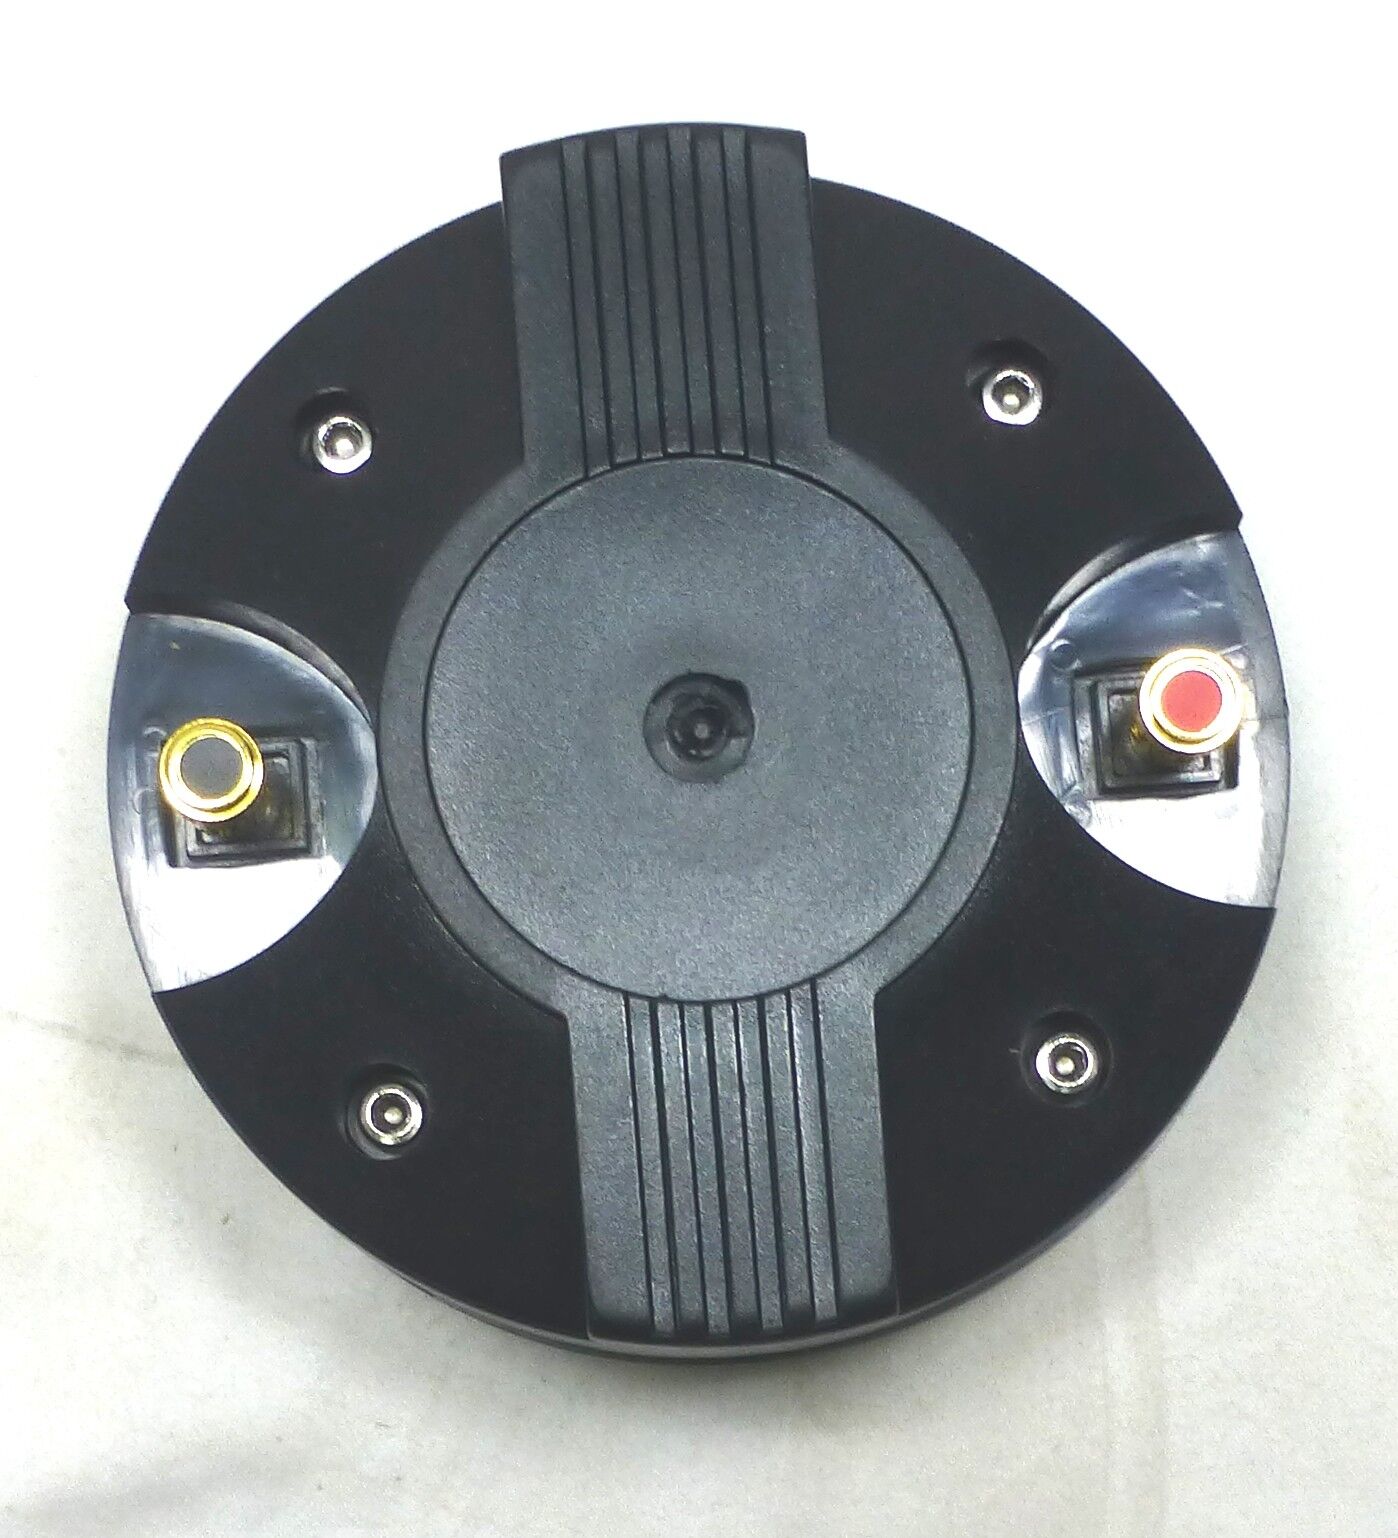 Replacement Driver Turbosound CD-111 For TXD121, TXD121M & TXD151, 8 Ohms